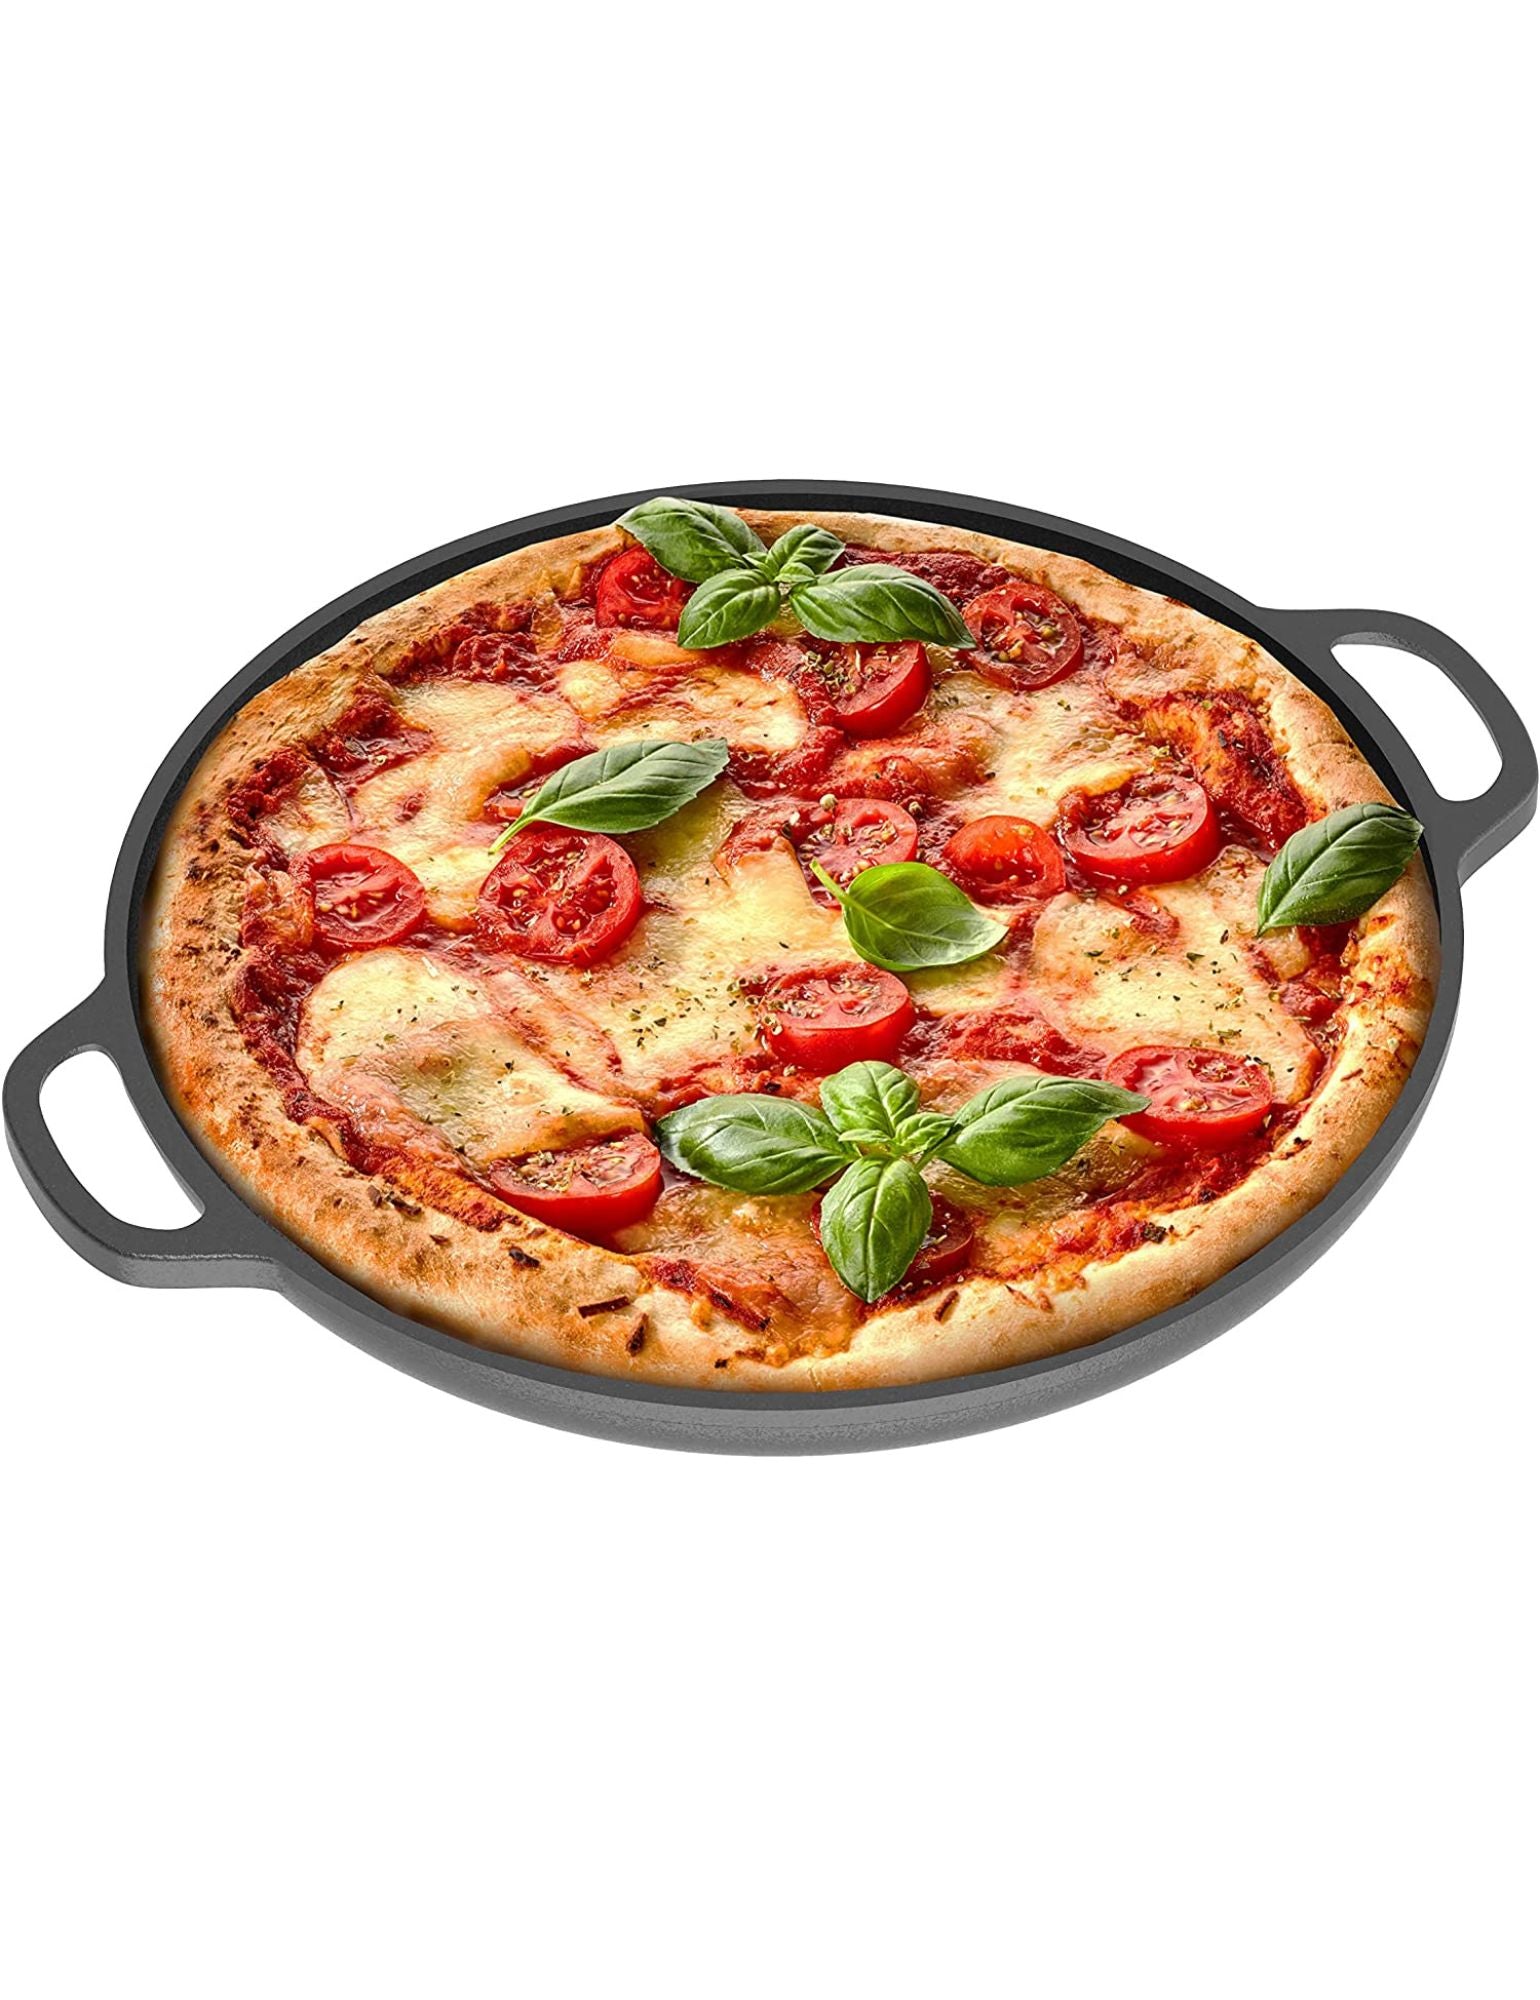 Chef Pomodoro Chicago Deep Dish Pizza Pan 12 Inch, Hard Anodized Aluminum  Pizza Pan for Oven, Pre-Seasoned Bakeware Kitchenware, Non-Stick Round  Pizza